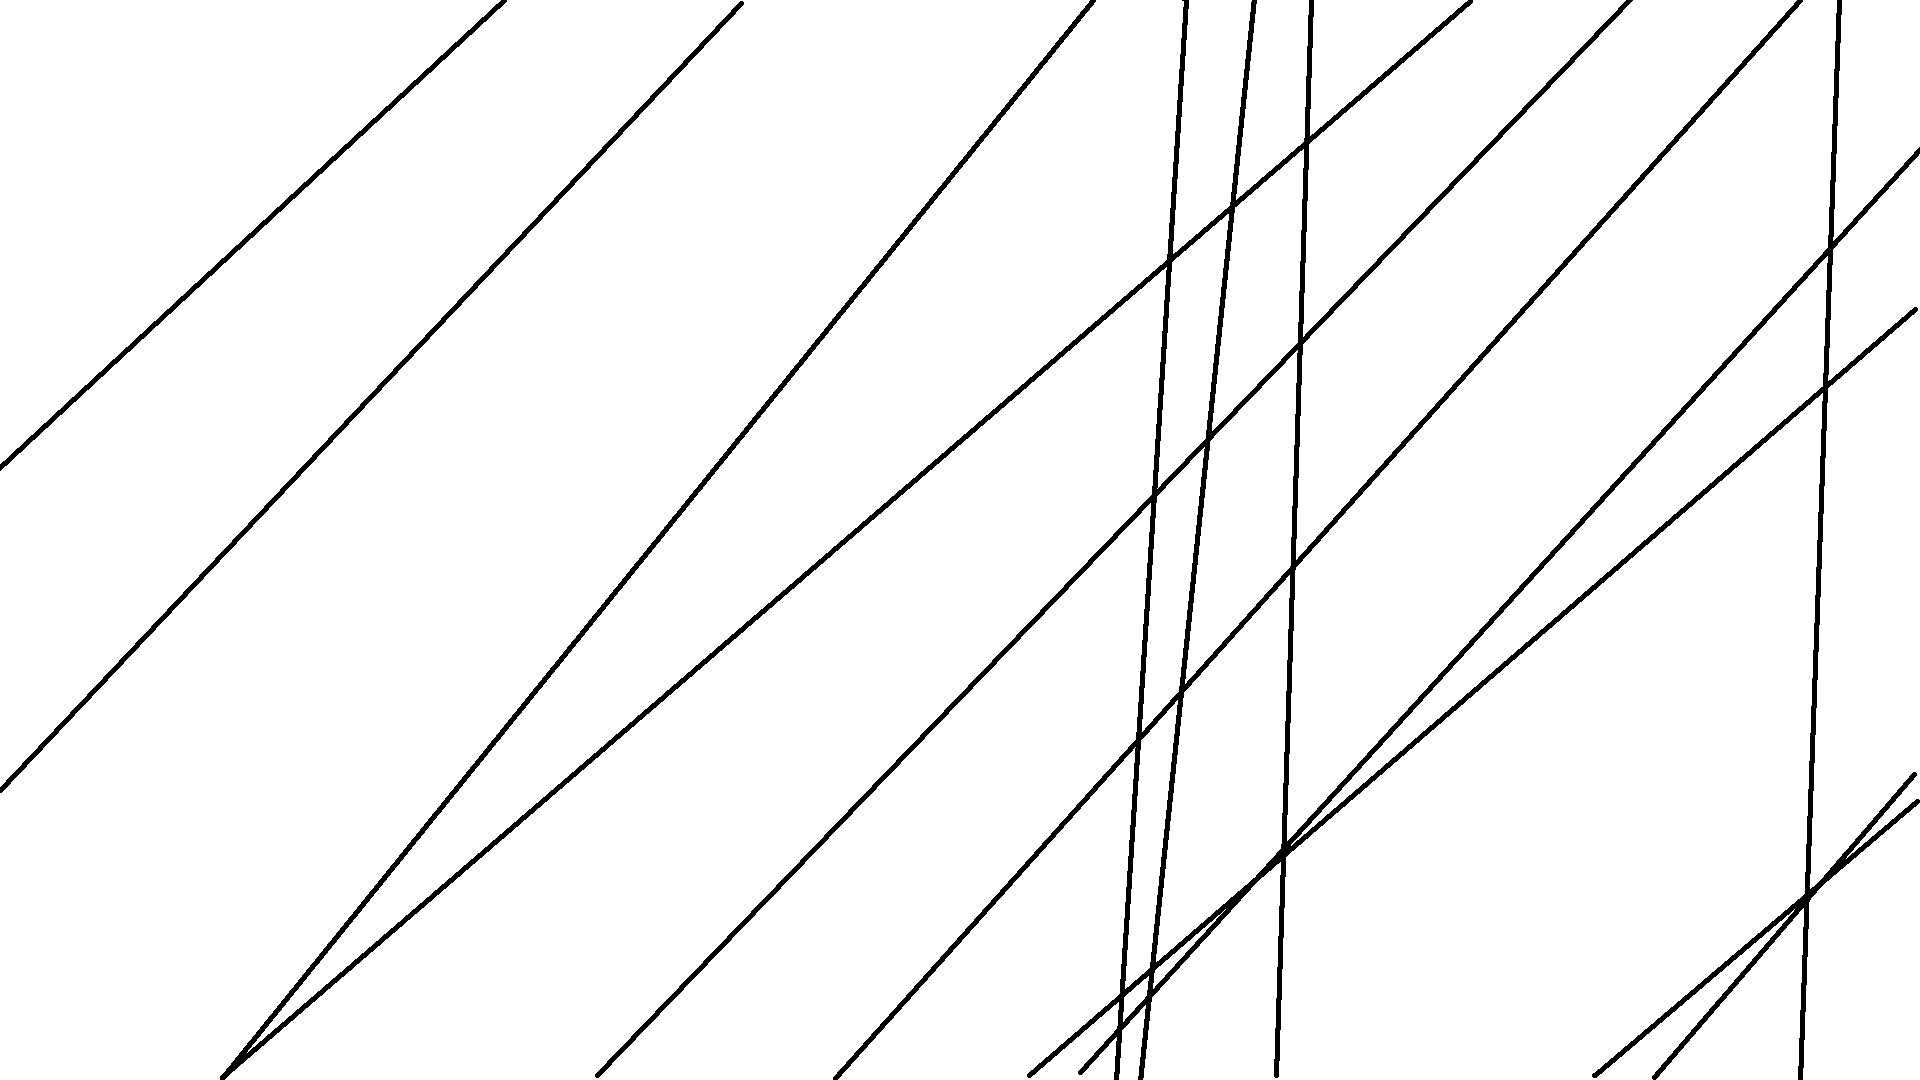 2020-03-13 Bahnfahrt Linienkomposition